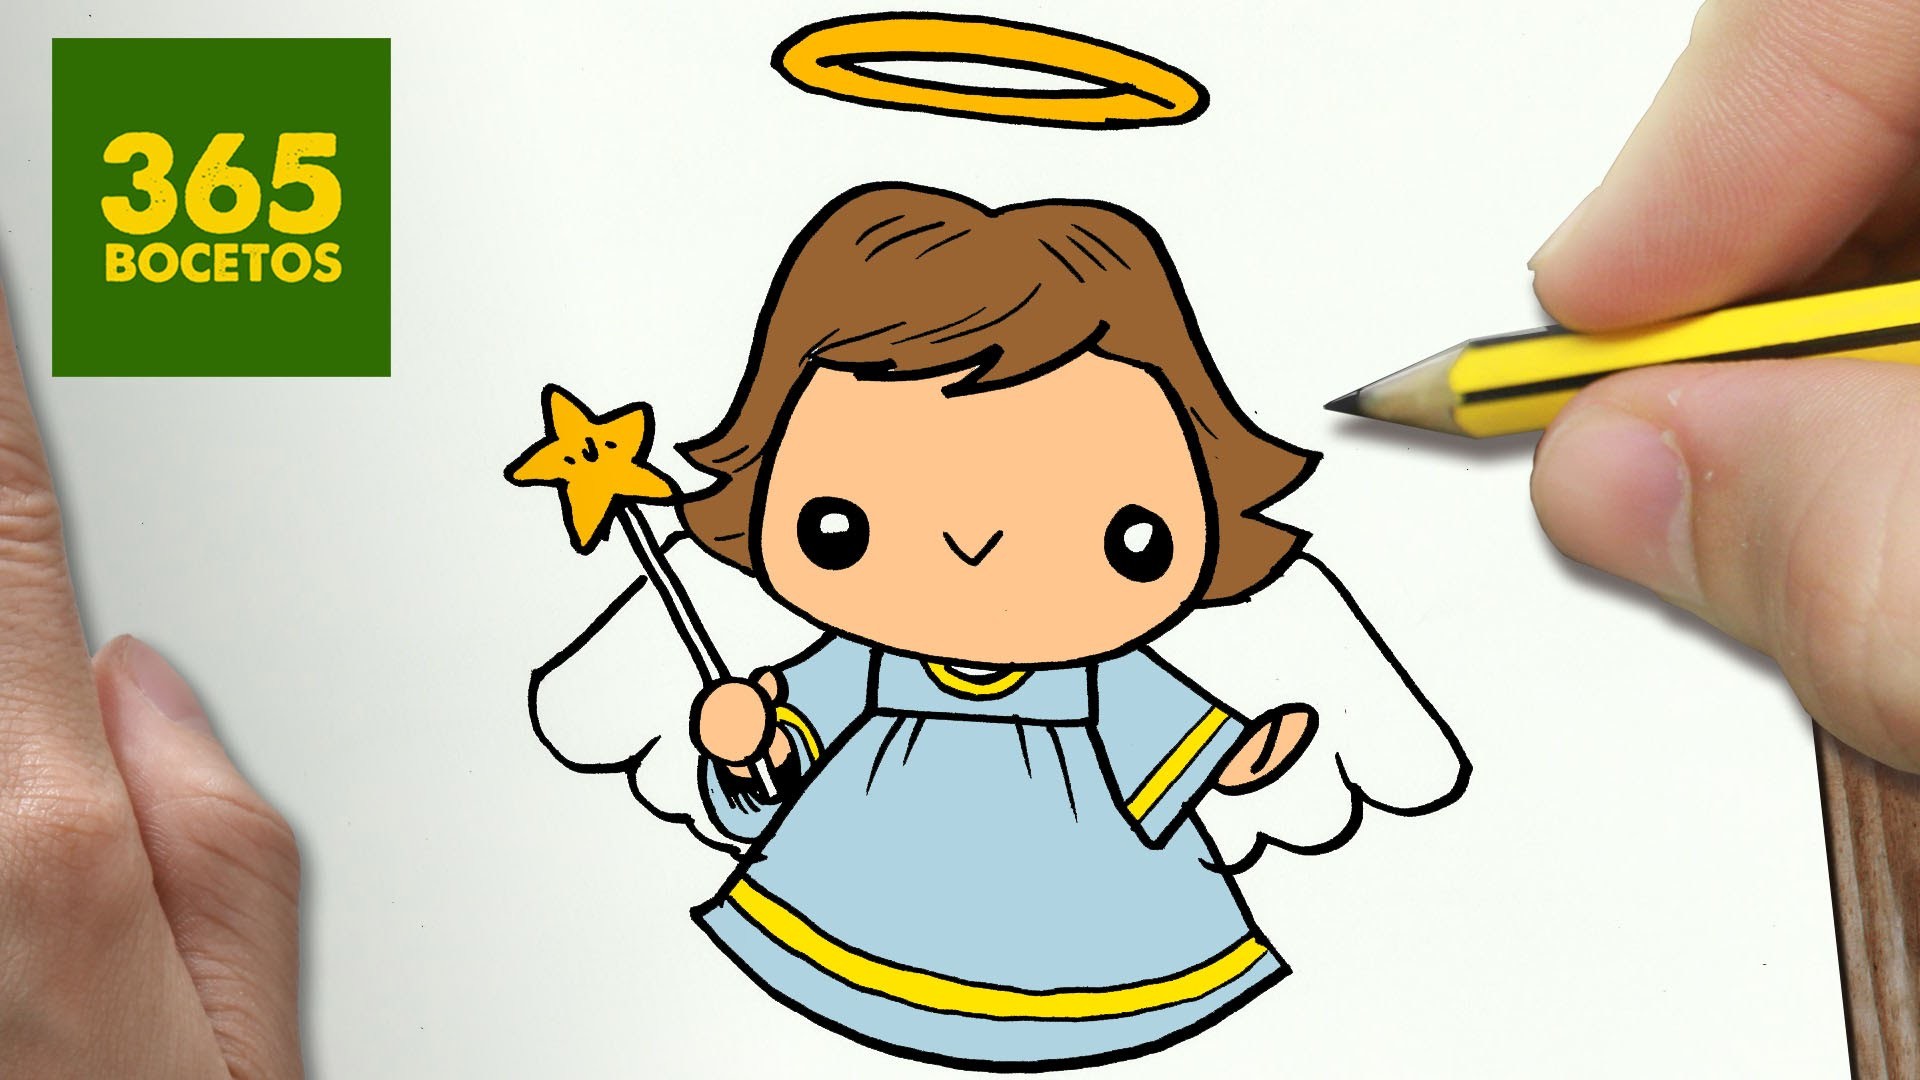 COMO DIBUJAR UN ANGEL PARA NAVIDAD PASO A PASO: Dibujos kawaii navideños - How to draw a angel